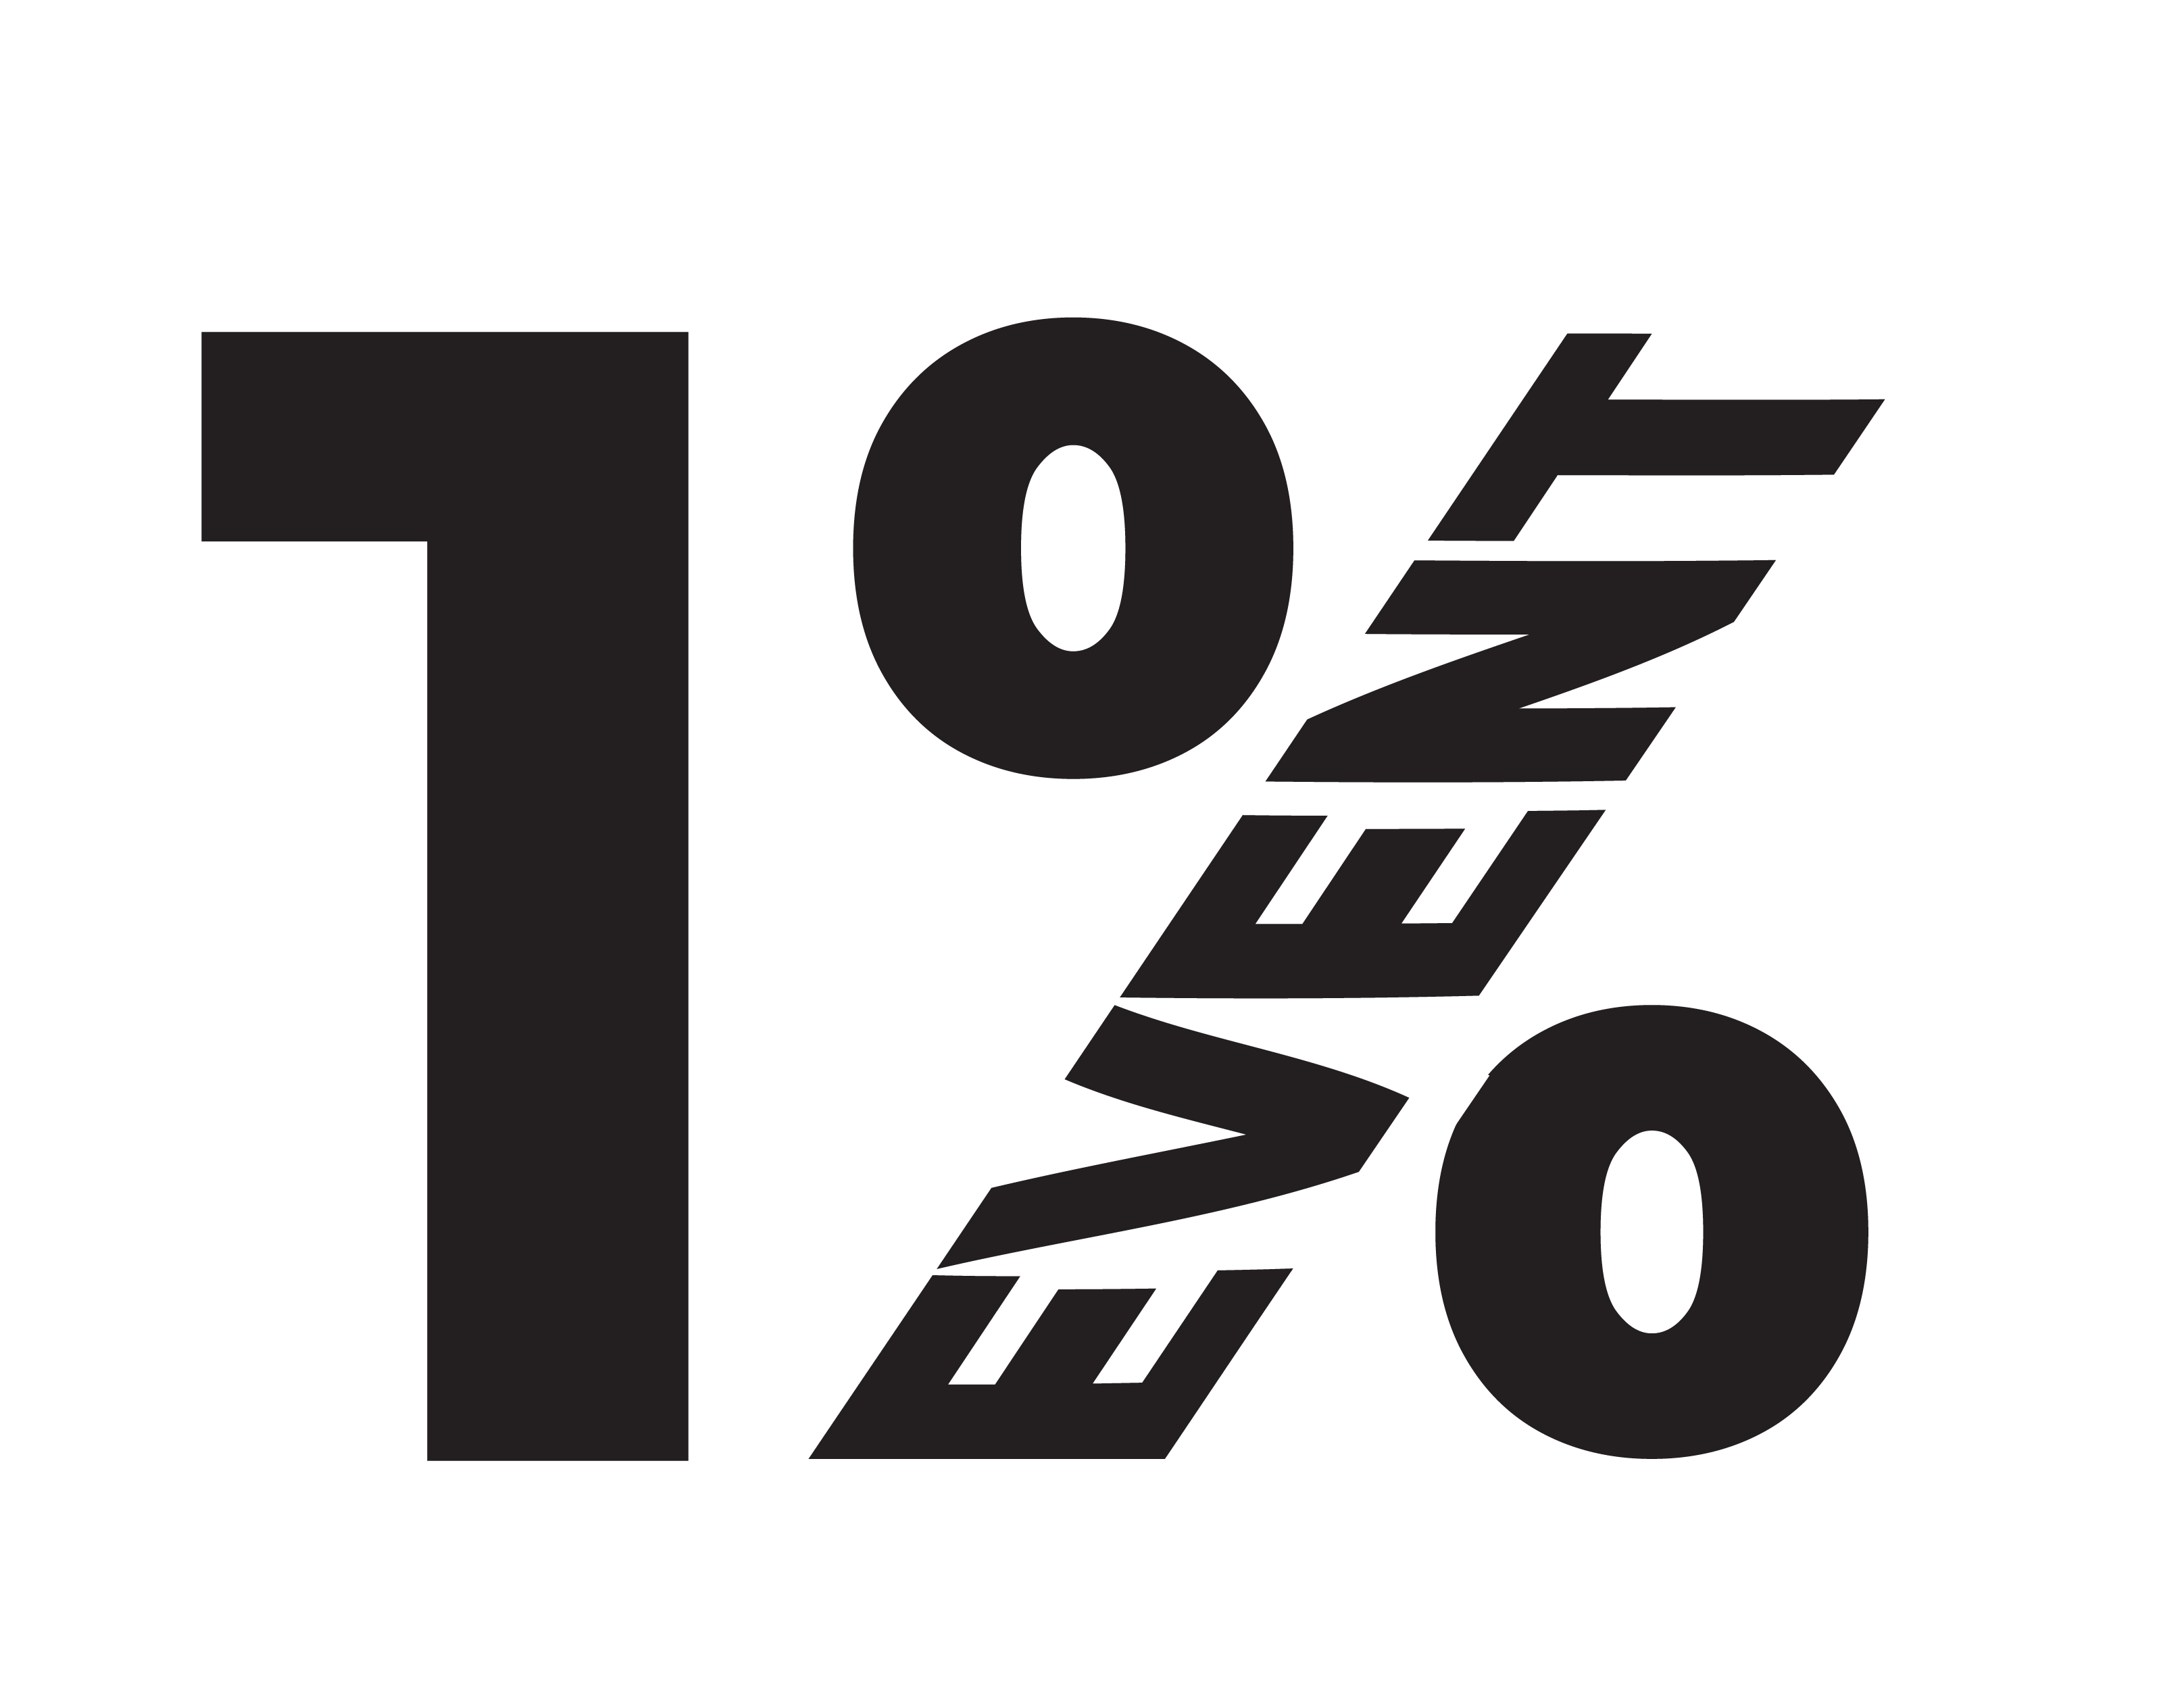 1% event logo with stroke_black logo 2